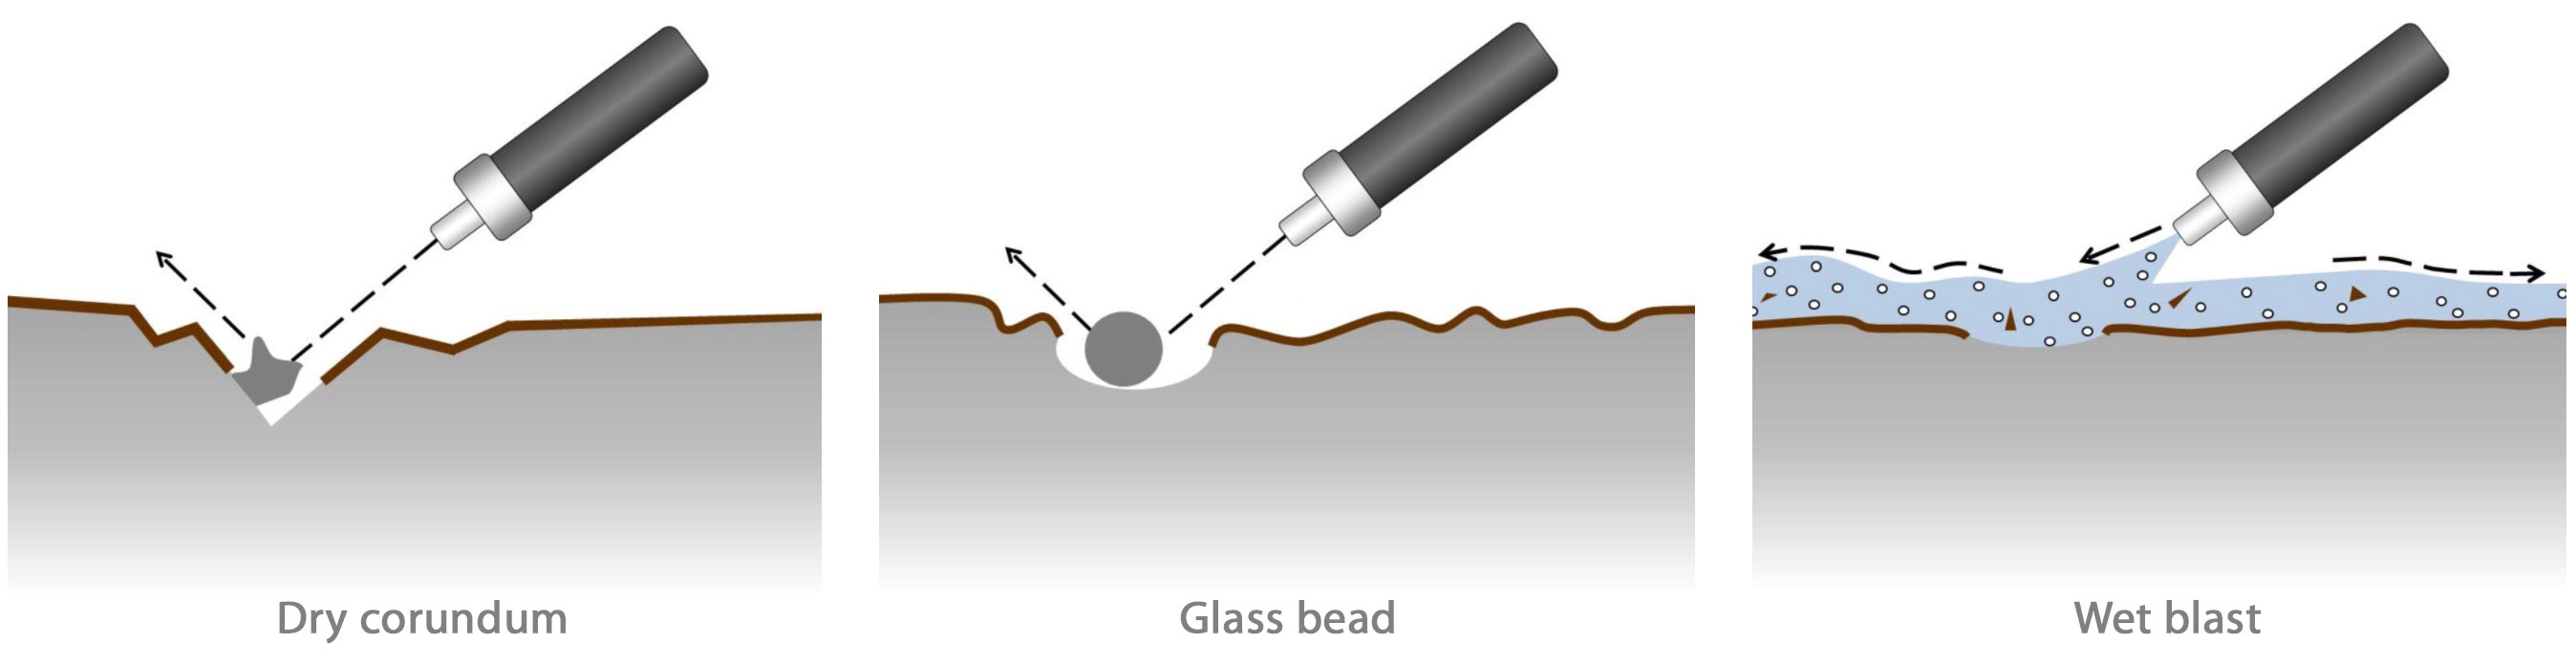 Dry versus wet blasting EN | Goudsmit Magnetics